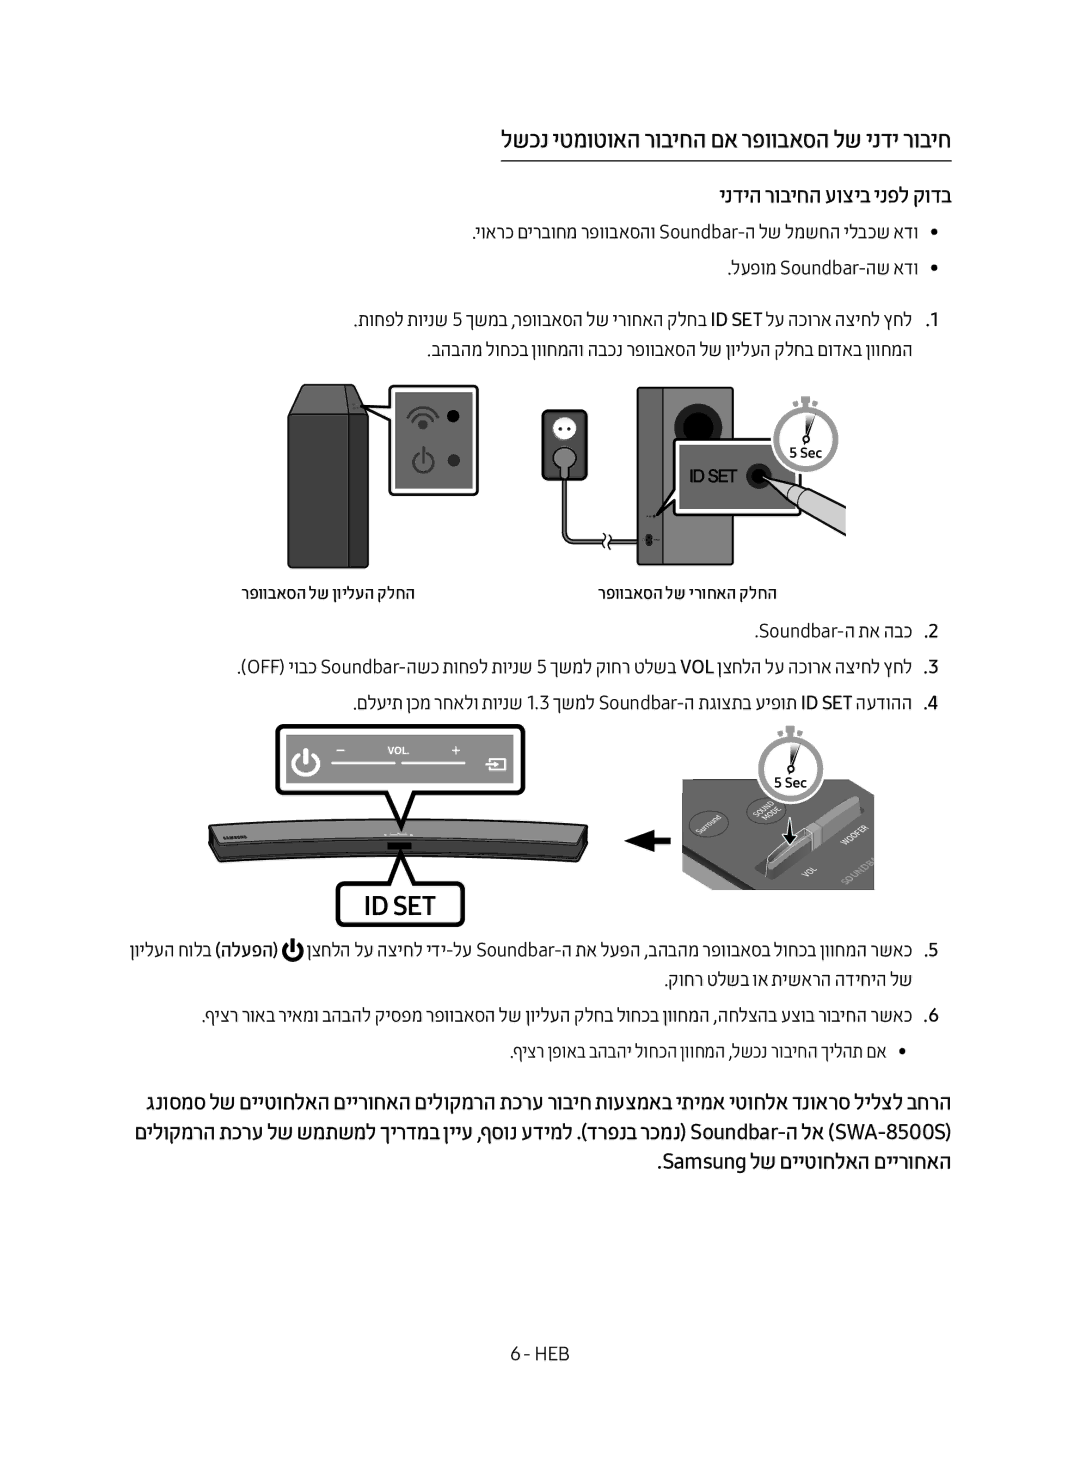 Samsung HW-M4501/SQ manual לשכנ יטמוטואה רוביחה םא רפוובאסה לש ינדי רוביח, ינדיה רוביחה עוציב ינפל קודב 